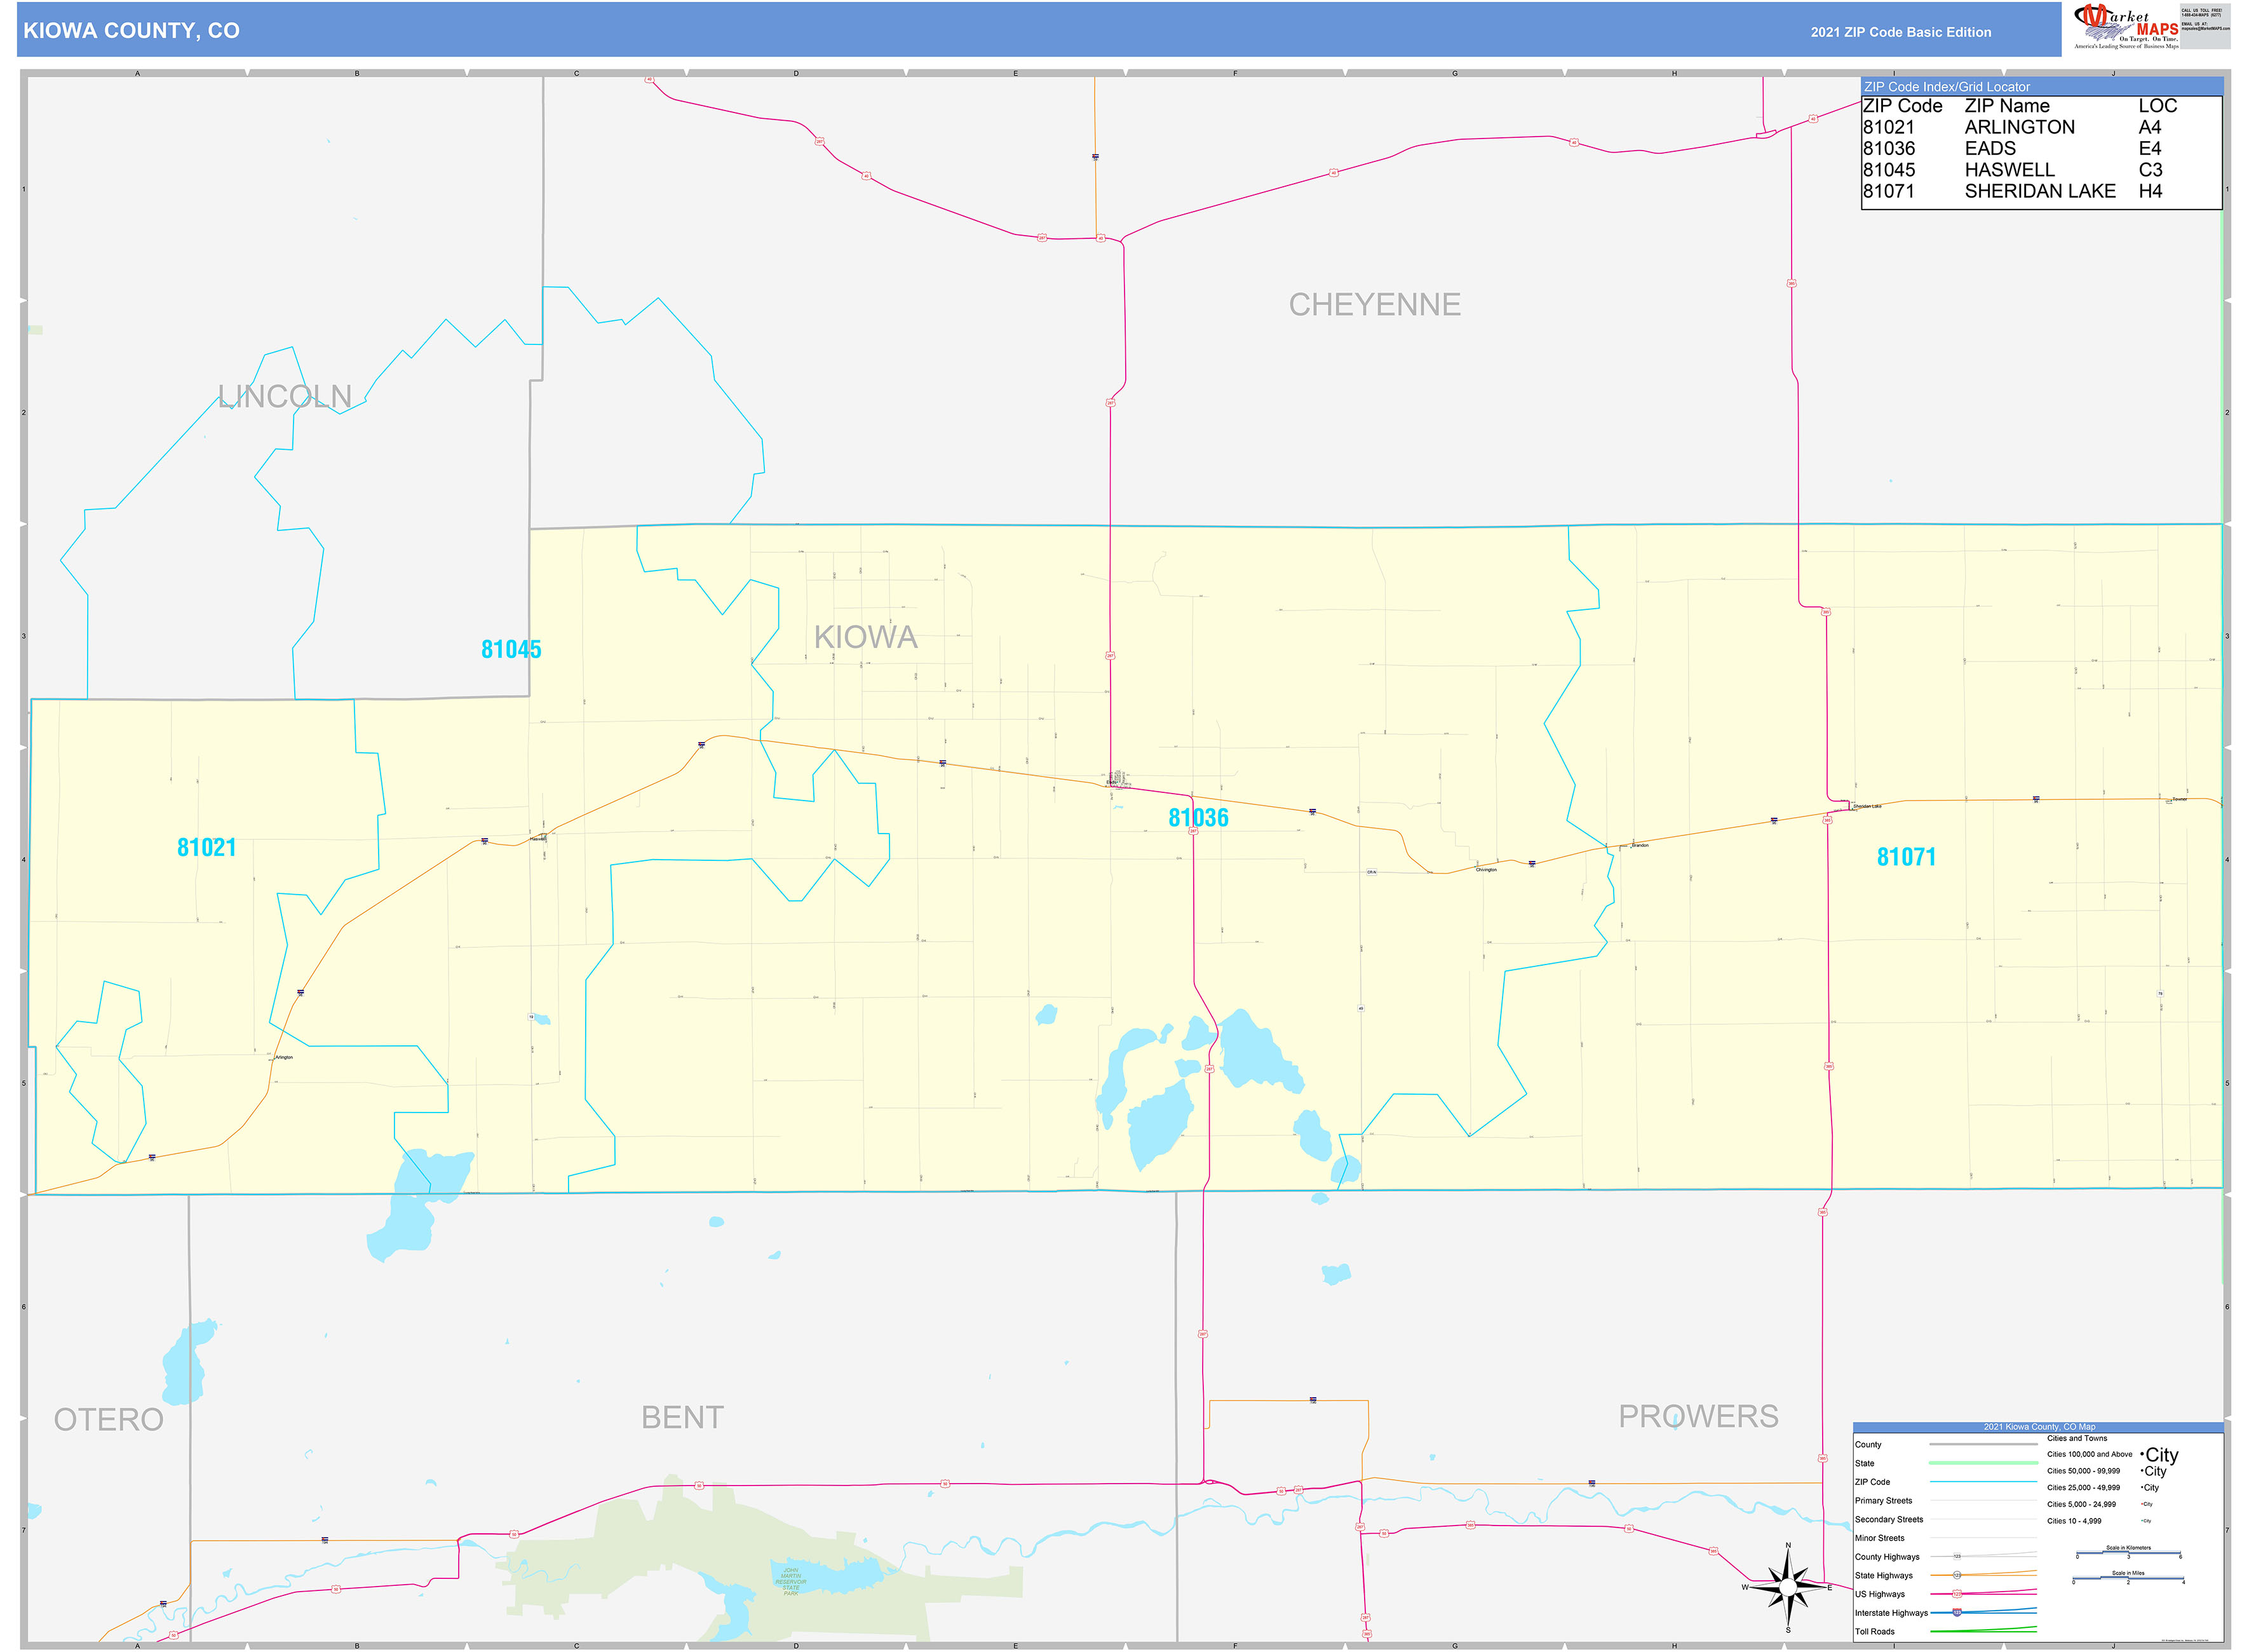 Kiowa County, CO Zip Code Wall Map Basic Style by MarketMAPS - MapSales